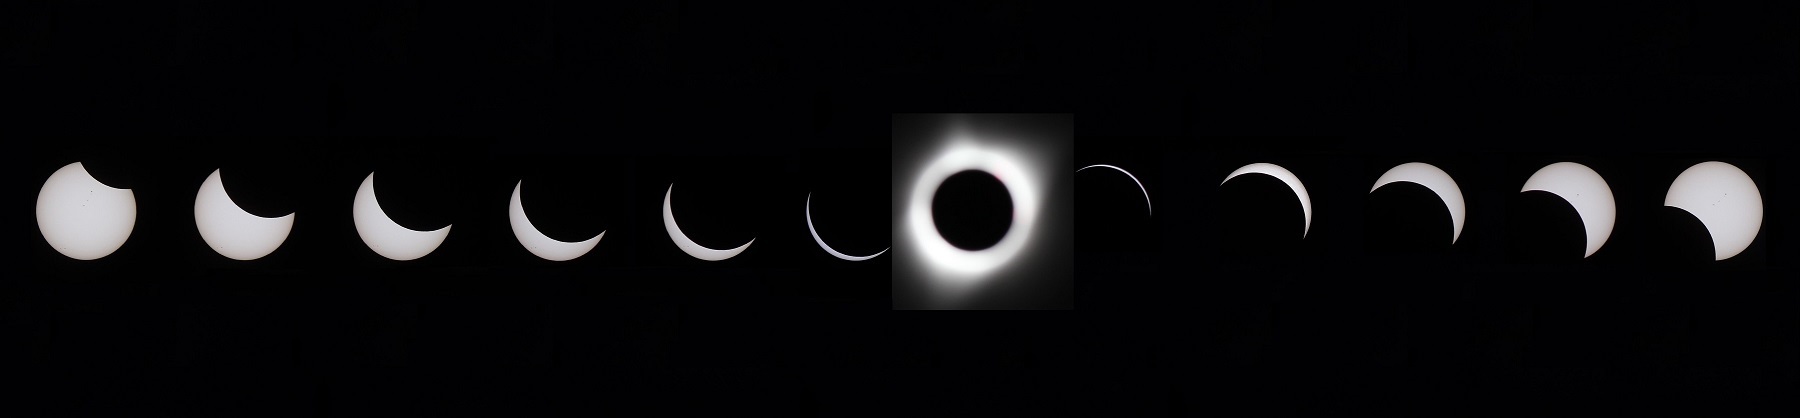 Eclipse du 21 août au Yellowstone